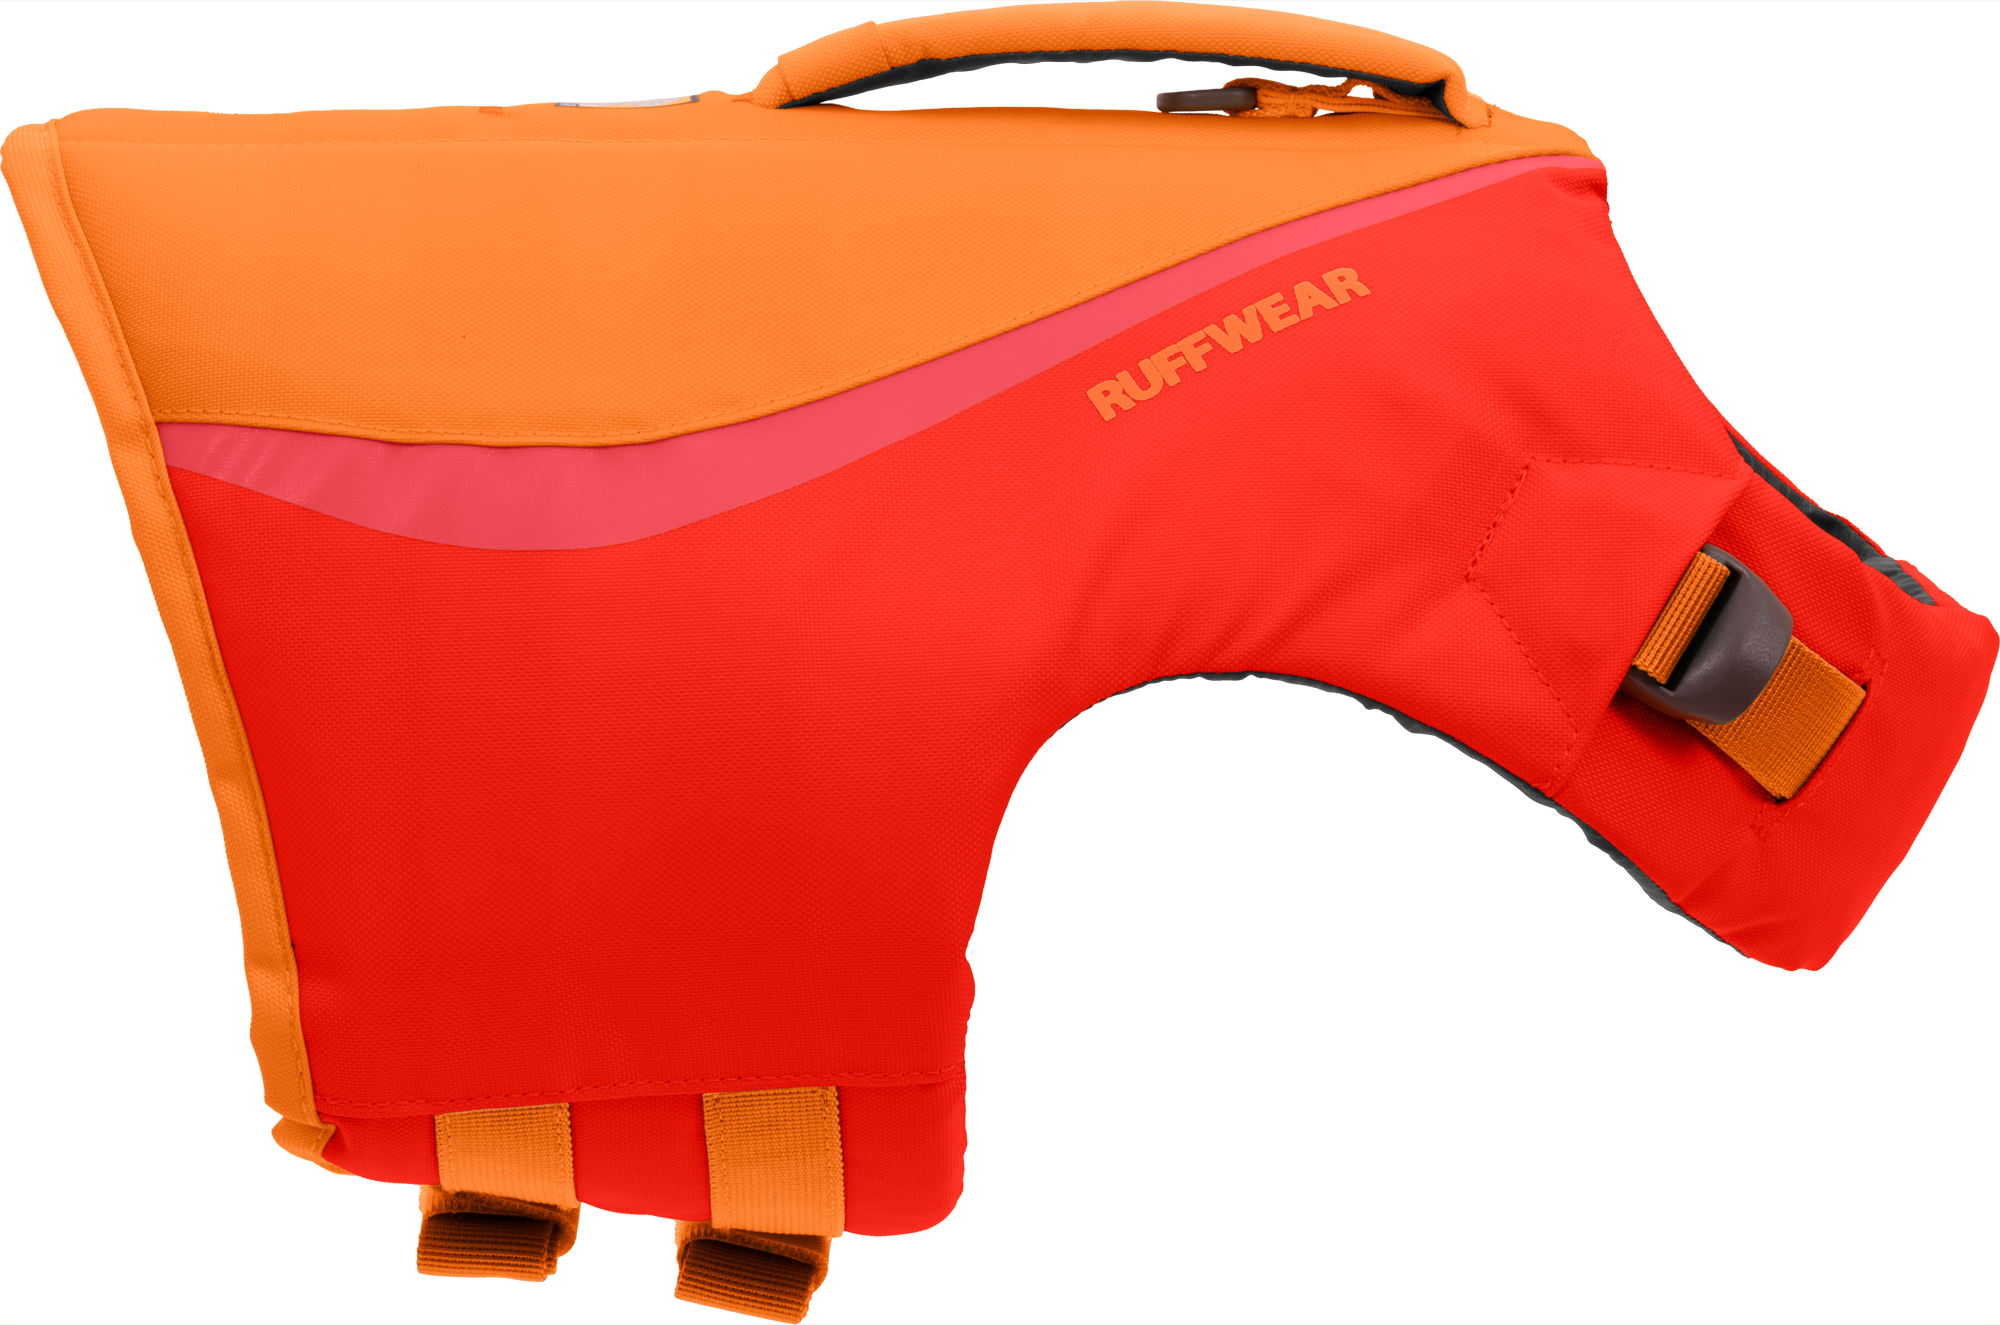 Ruffwear Float Coat Schwimmweste für Hunde Red Sumac XS